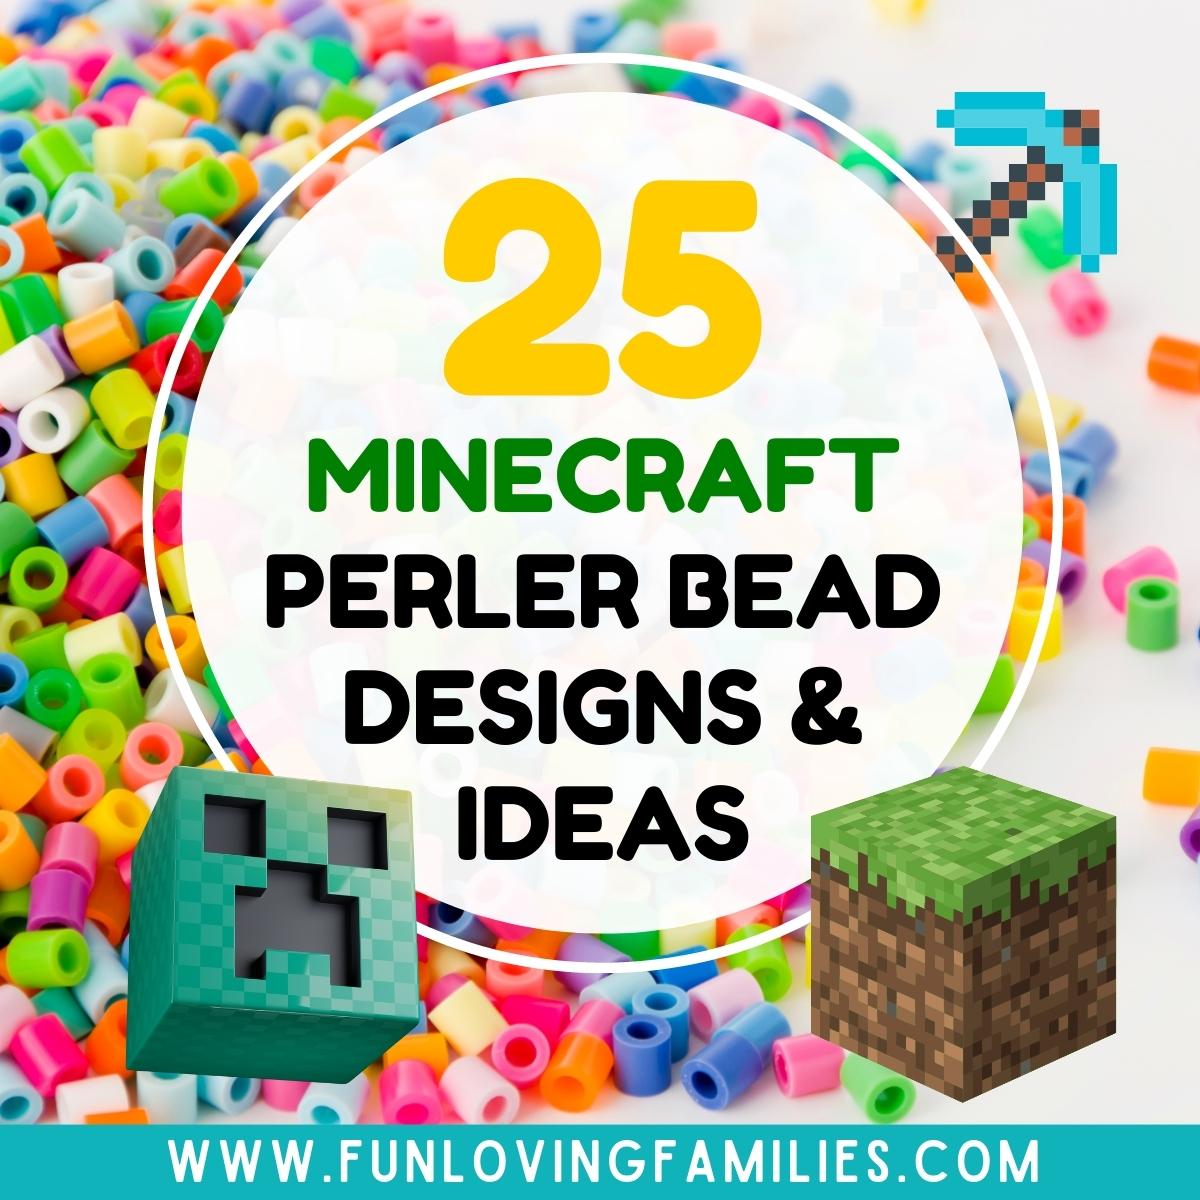 25 Minecraft Perler Bead Patterns, Designs and Ideas